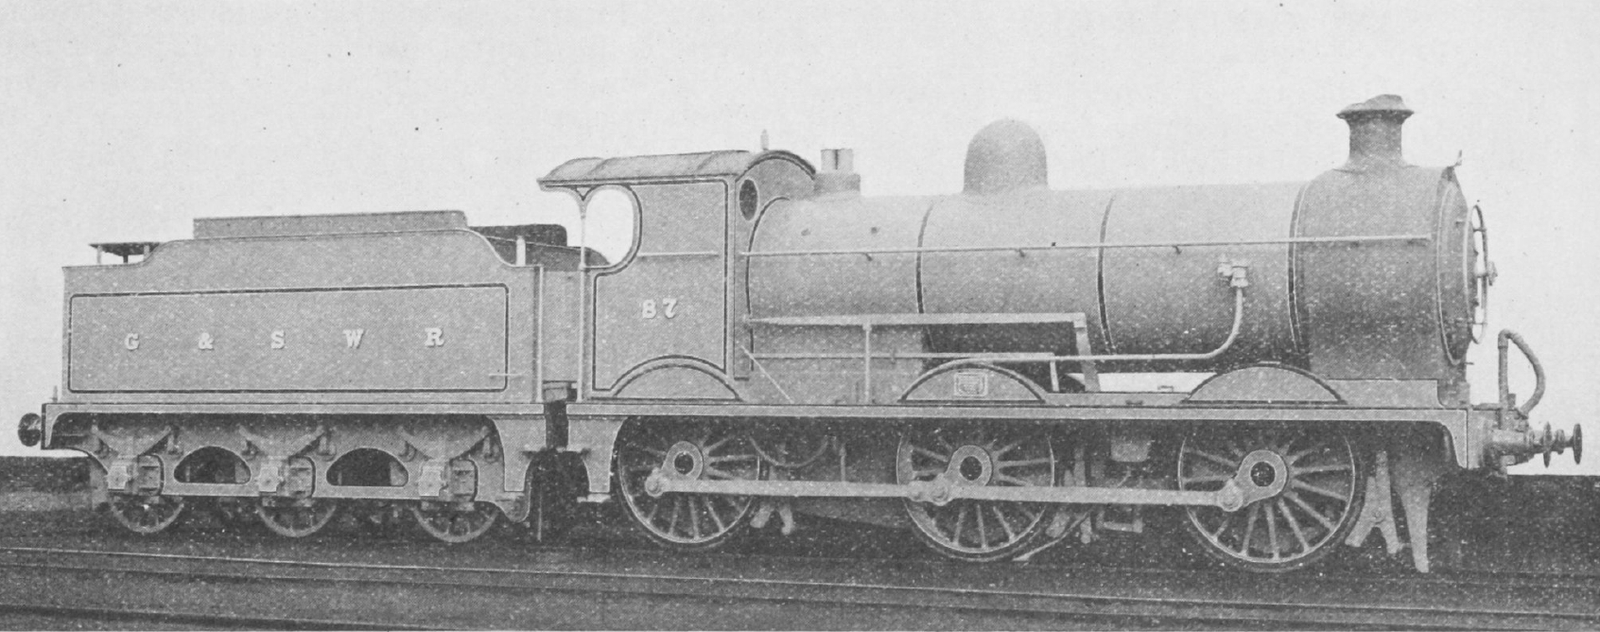 Rebuilt locomotive